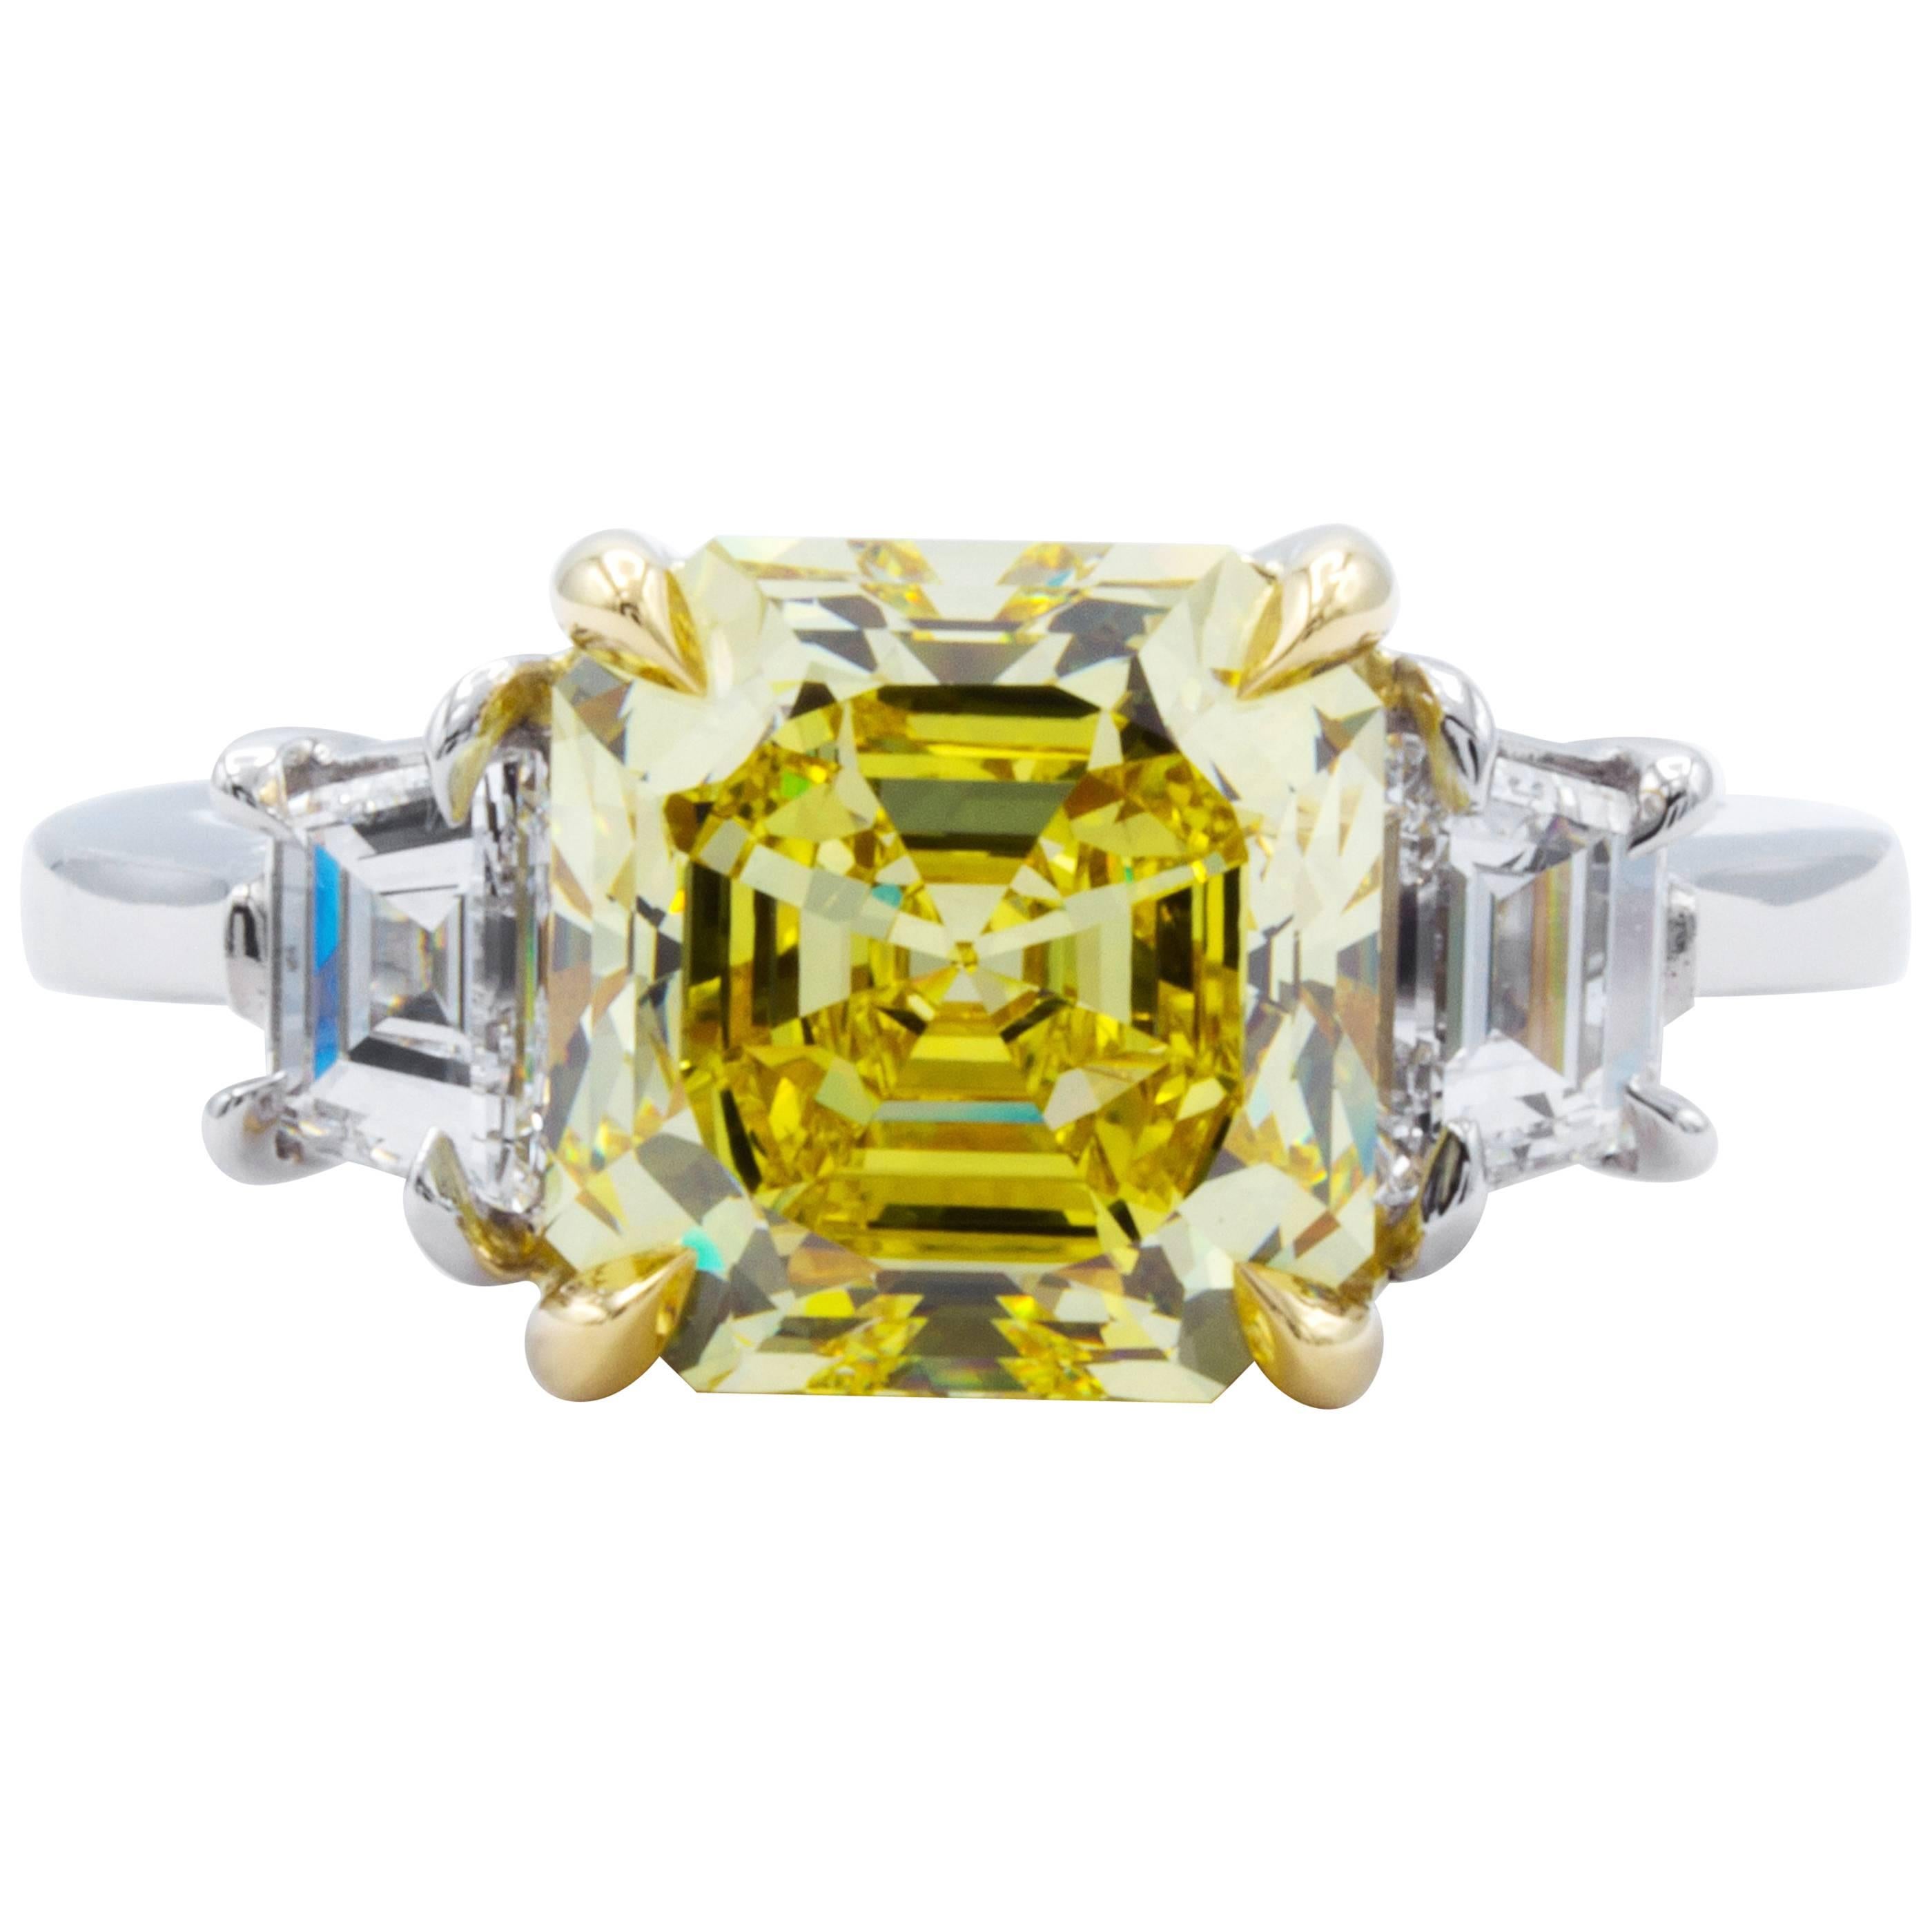 David Rosenberg 3.39 Carat Asscher Fancy Vivid GIA Three-Stone Diamond Ring